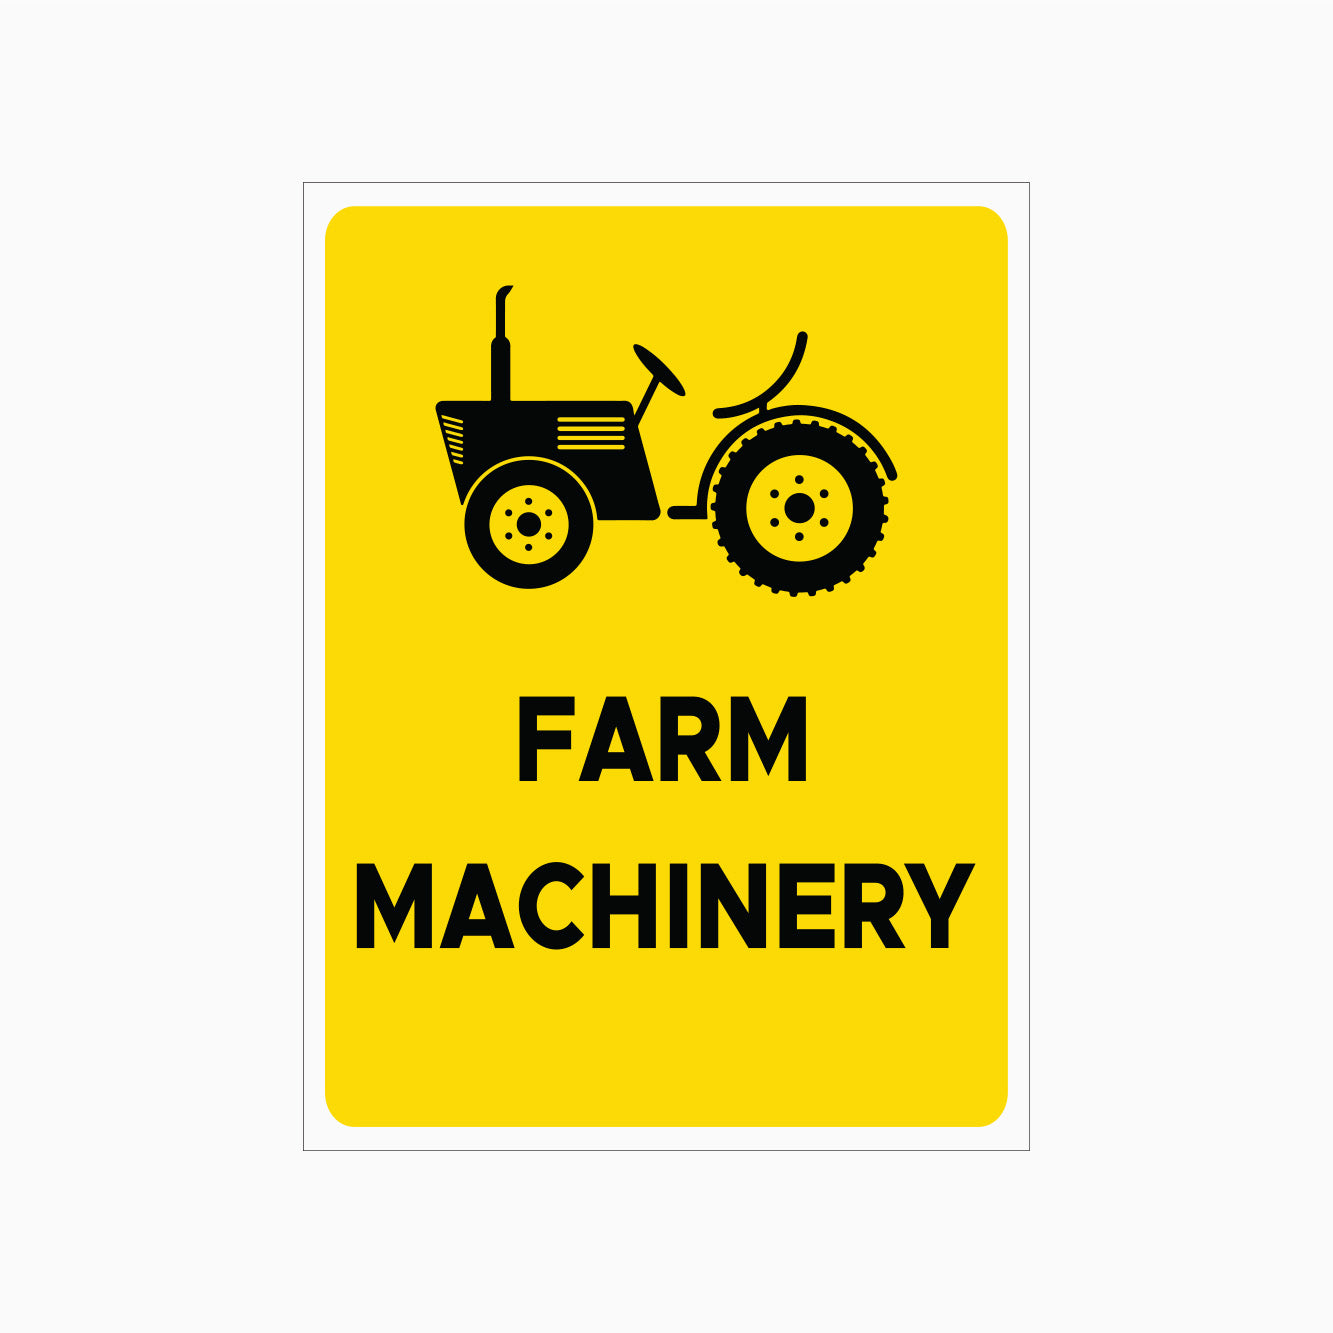 FARM MACHINERY SIGN